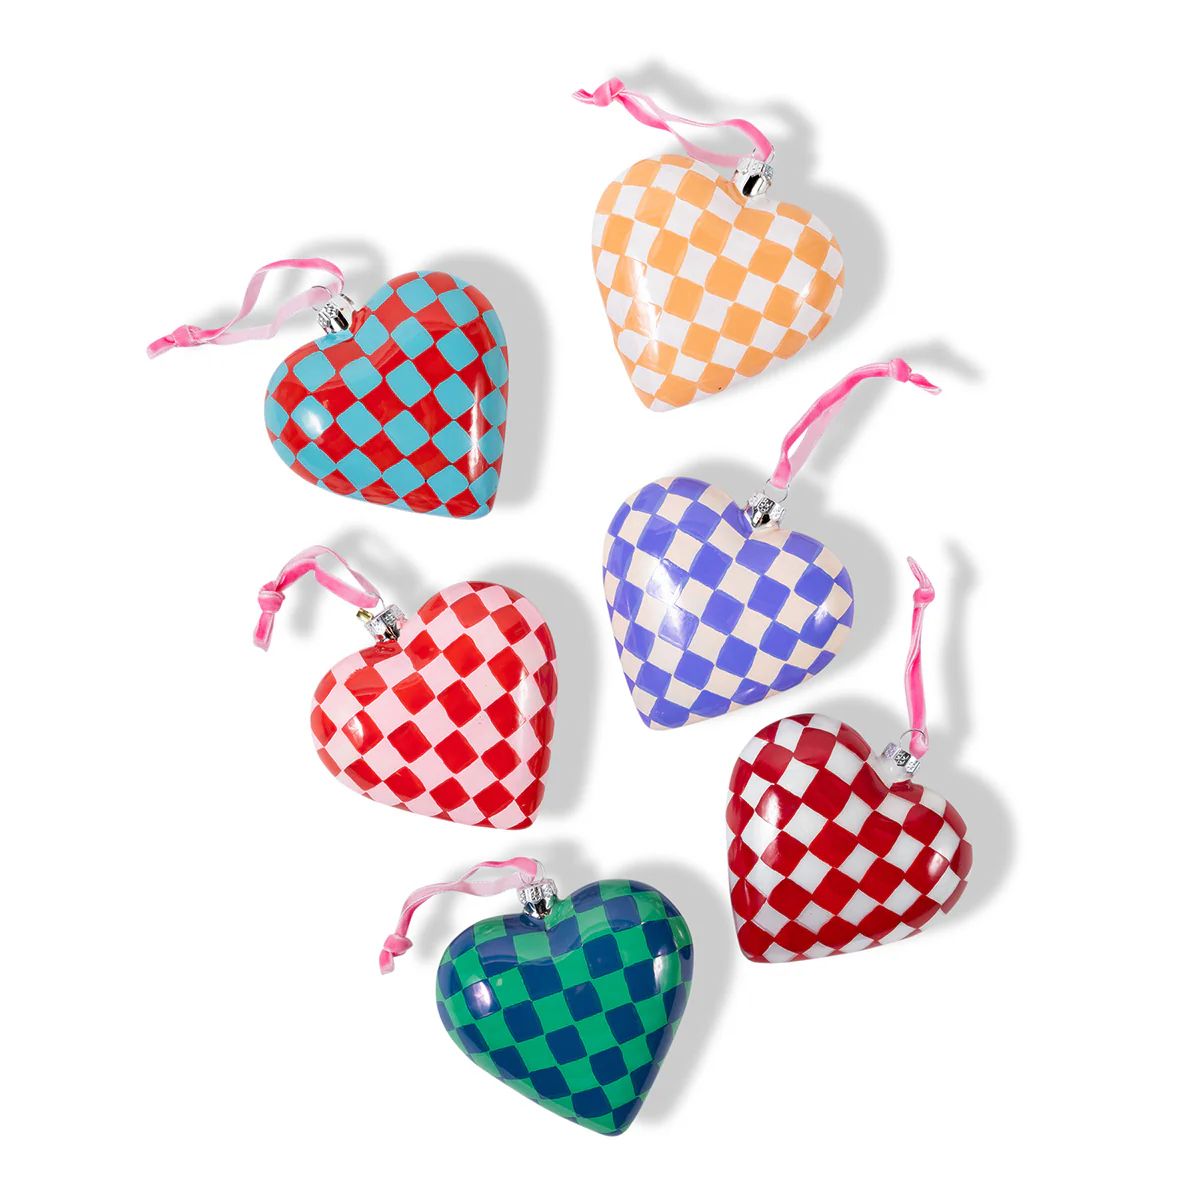 Checkered Hearts Ornaments S/6 | Furbish Studio